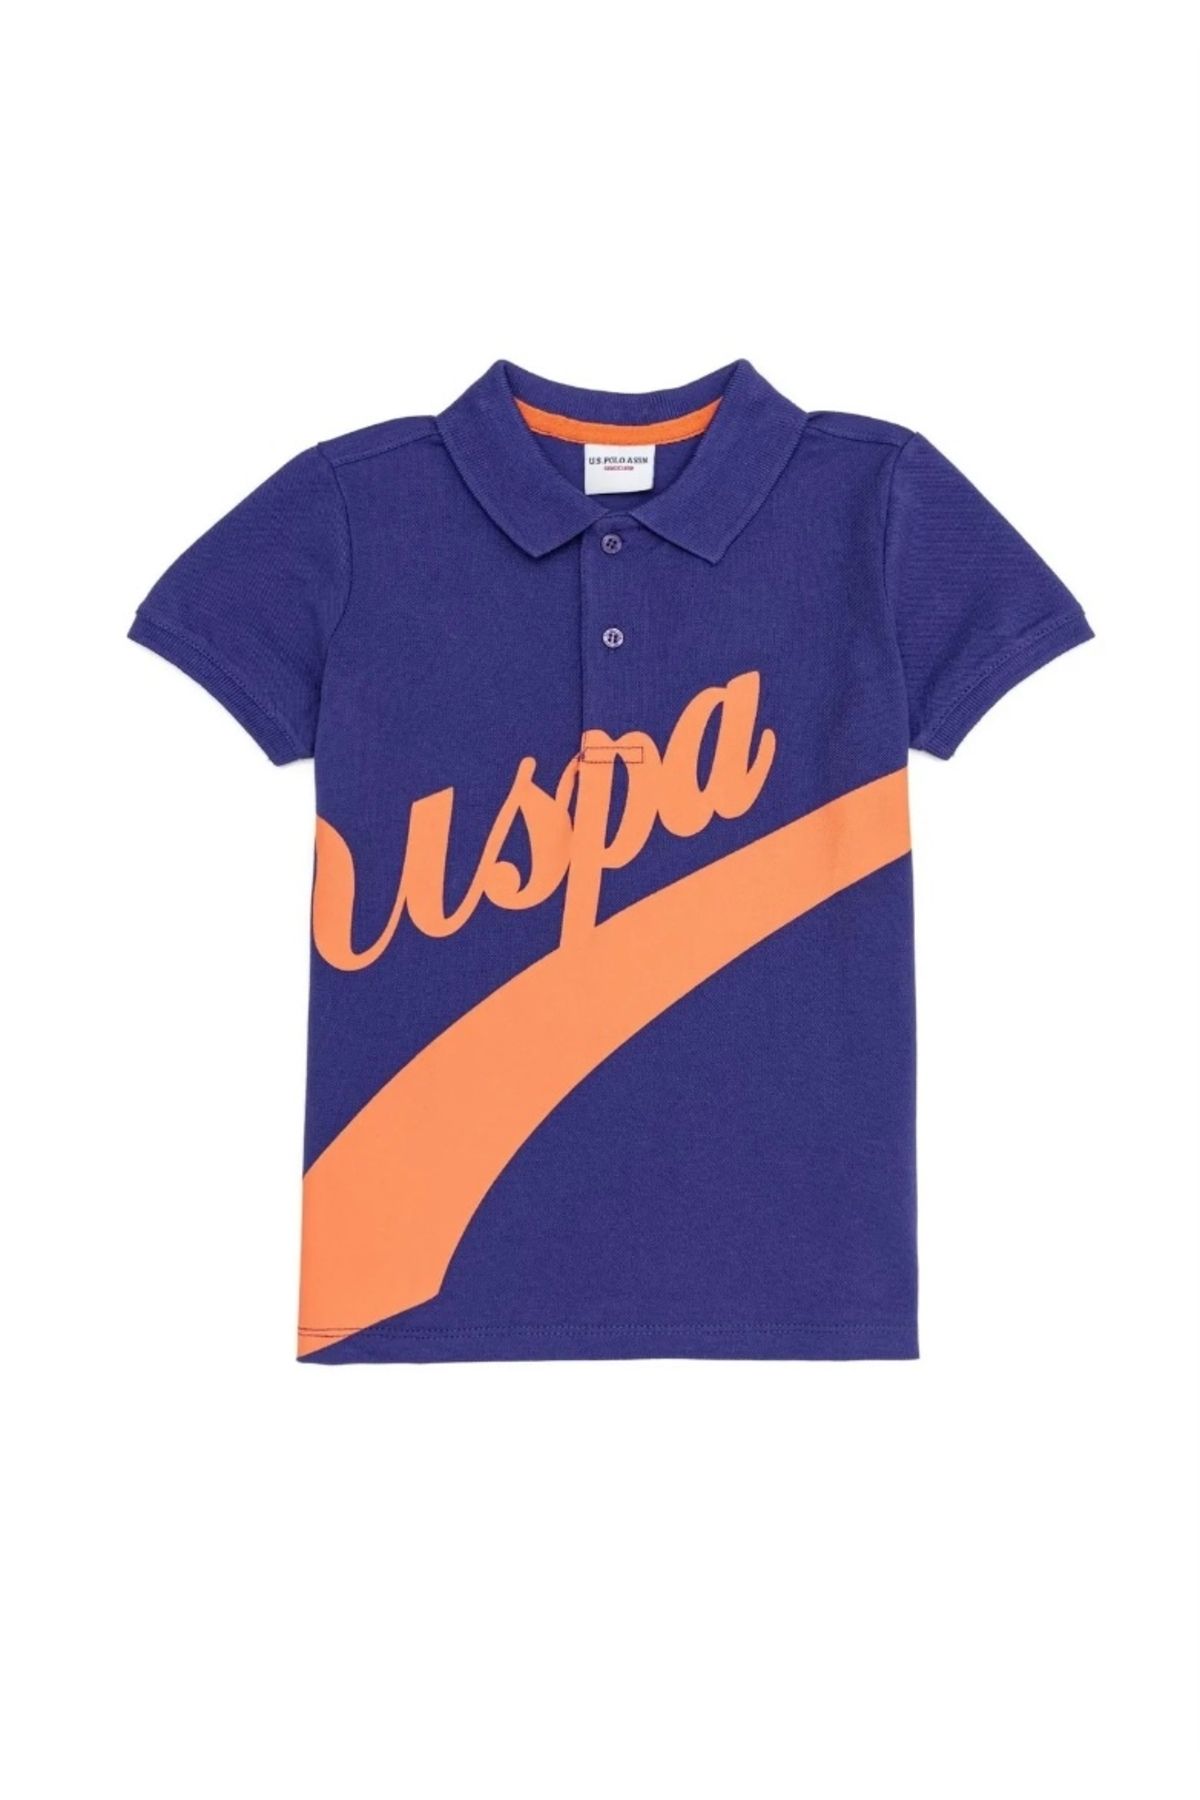 U.S. Polo Assn. Erkek Çocuk Polo Yaka T-shirt